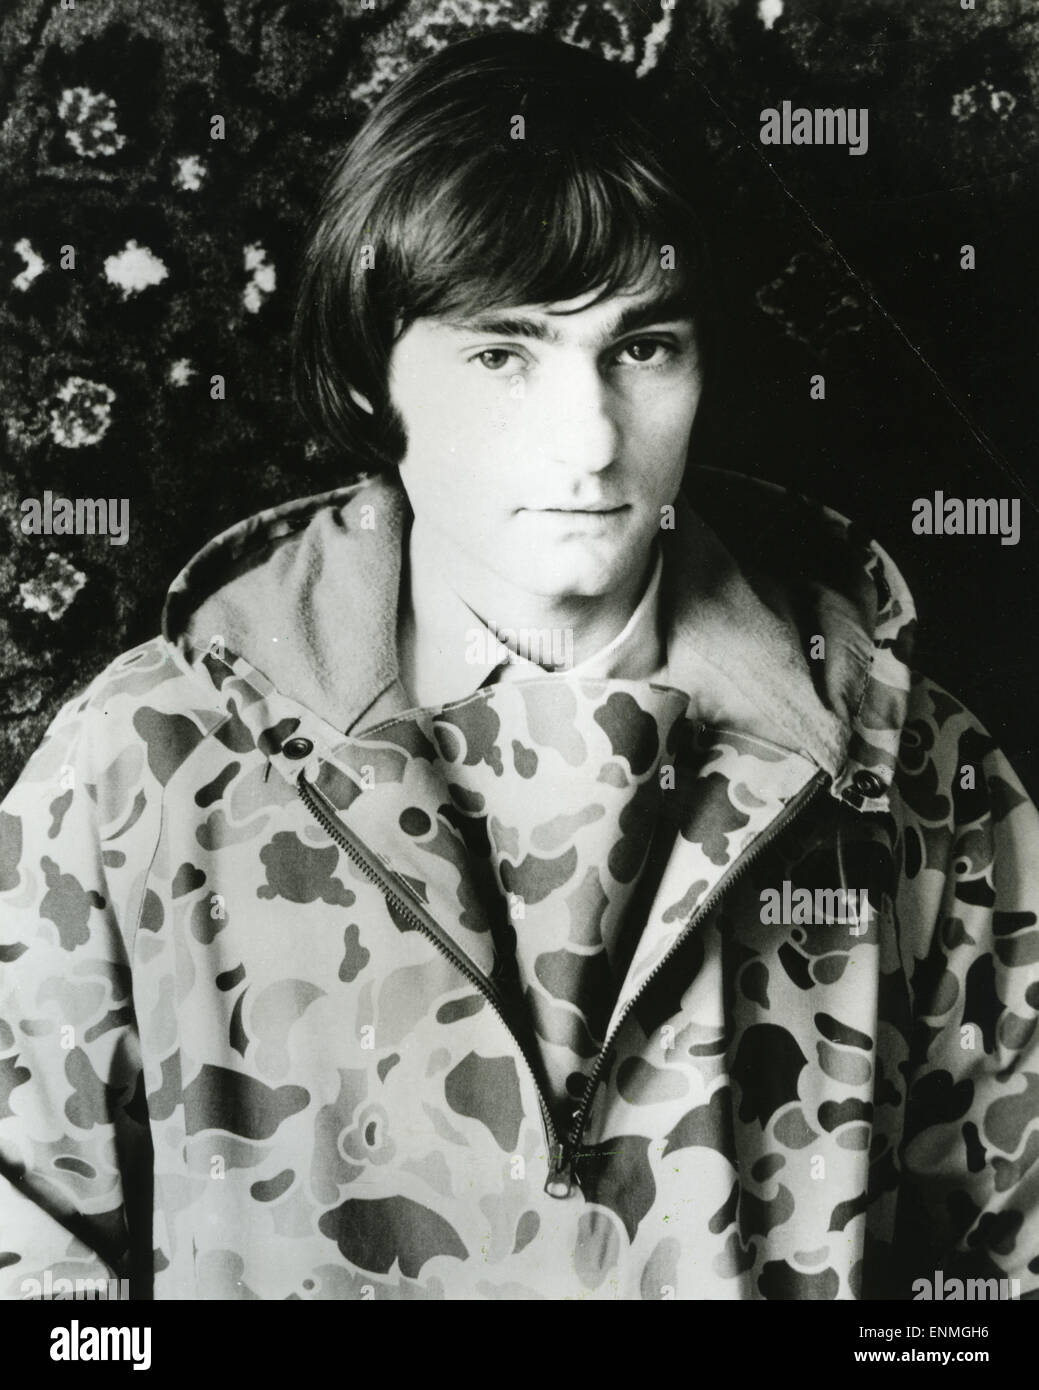 JEFFERSON AIRPLANE-Promo-Foto von uns rock Gruppenmitglied Marty Balin etwa 1968 Stockfoto